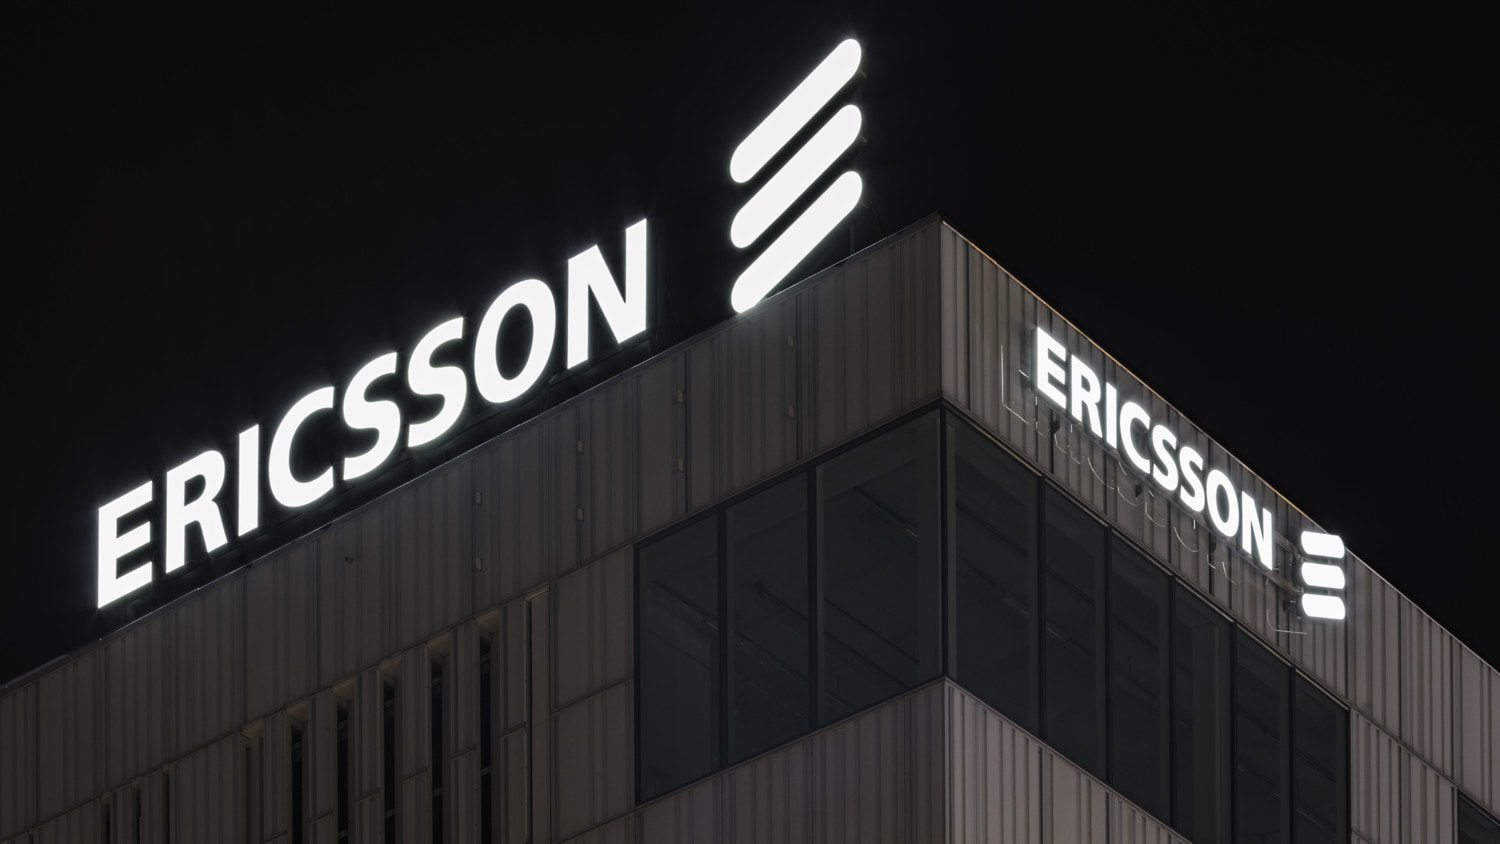 Photograph of Ericsson tech headquarters building